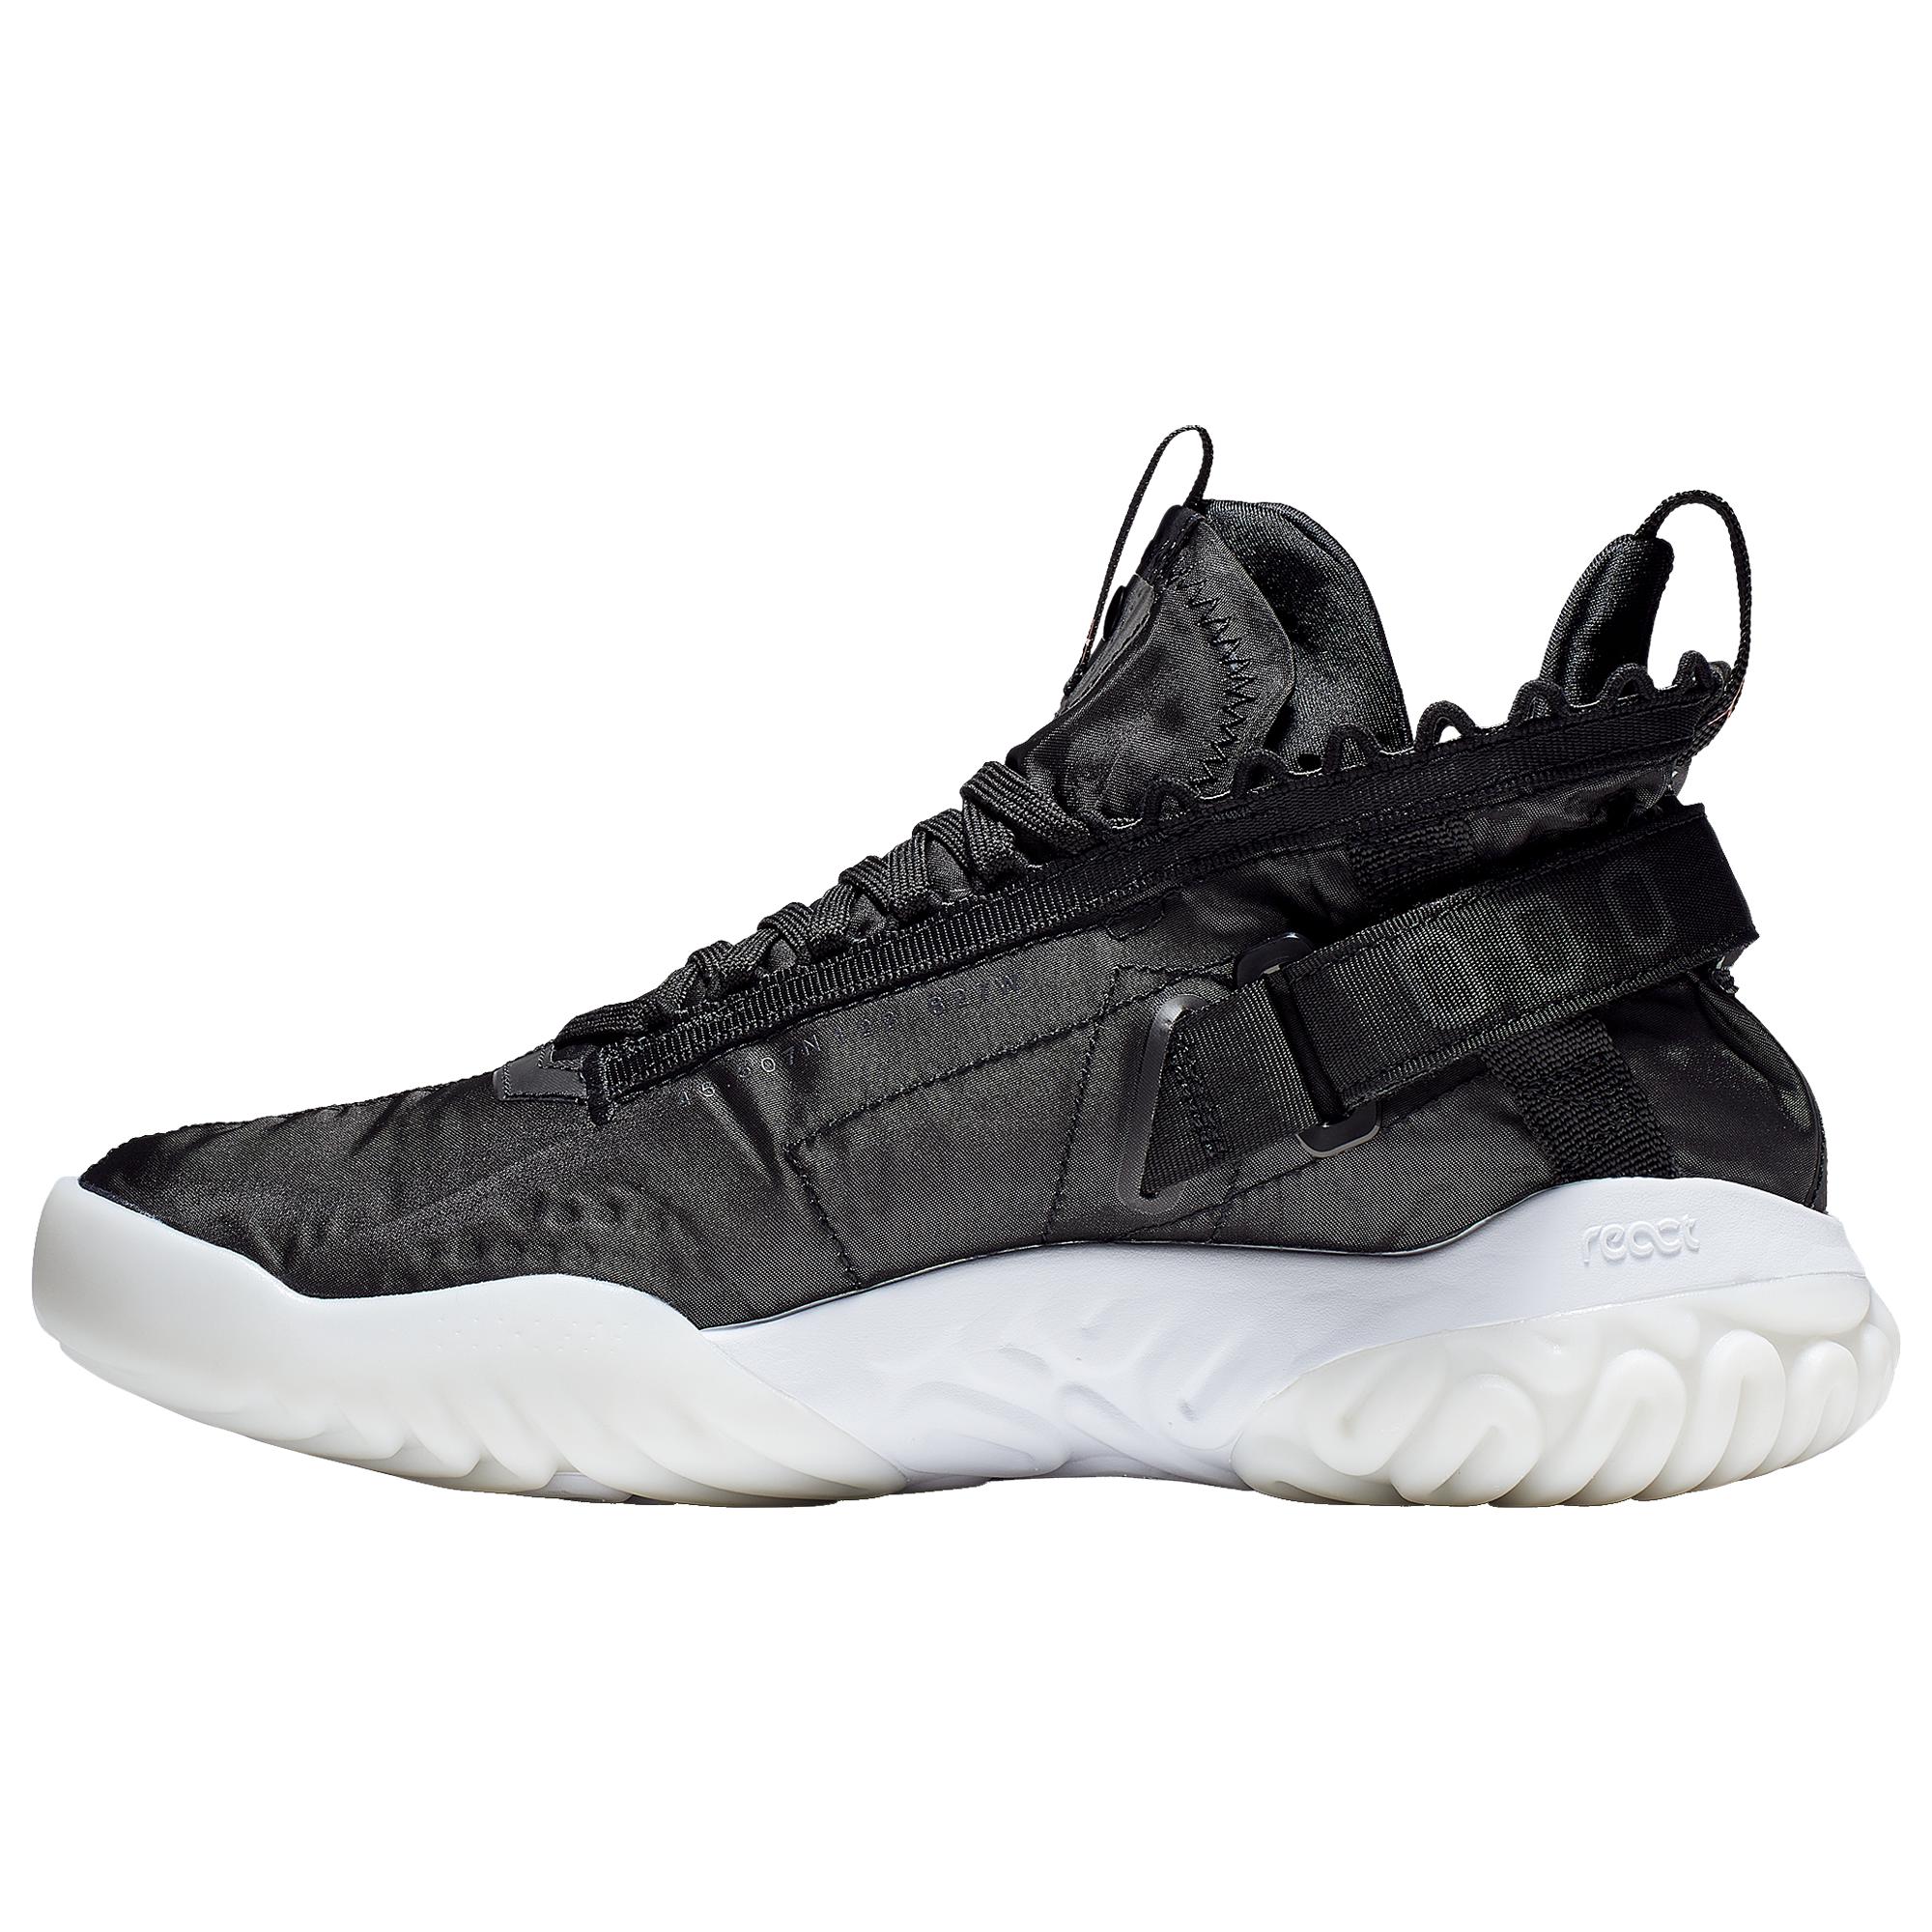 Nike Proto-react Basketball Shoes in Black/White (Black) for Men - Save ...